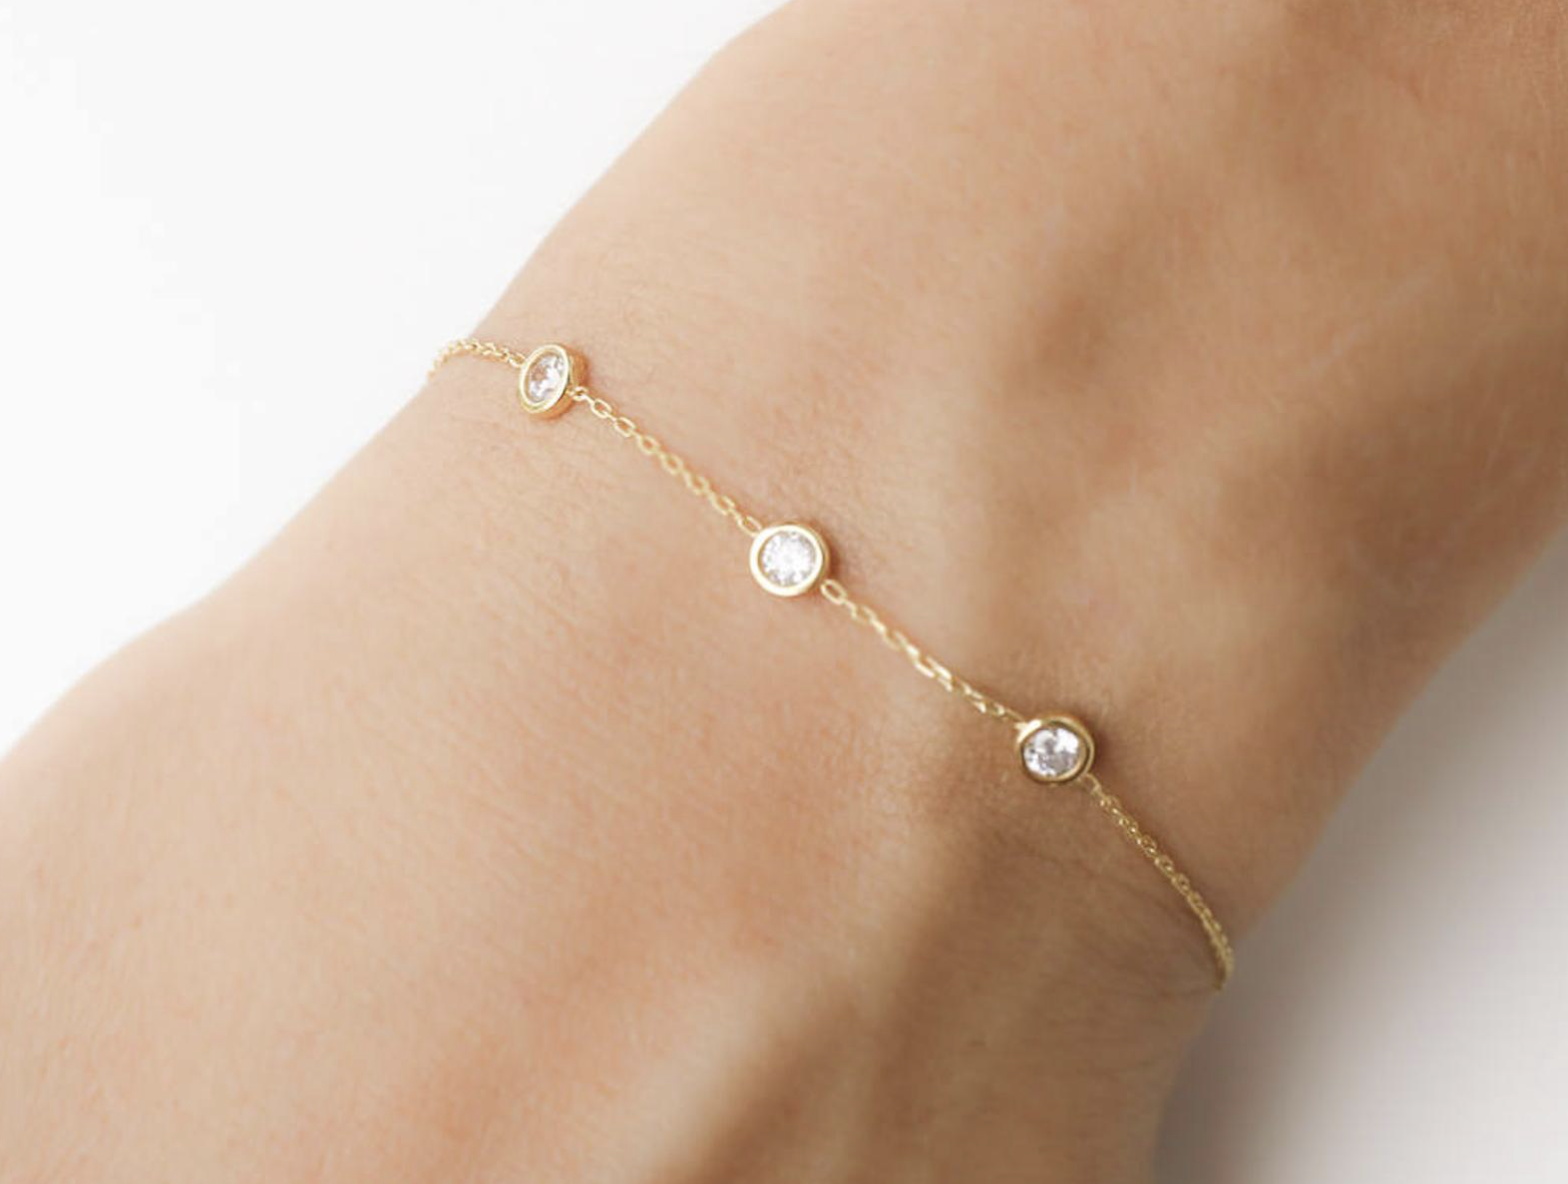 Model wearing bracelet with three stones